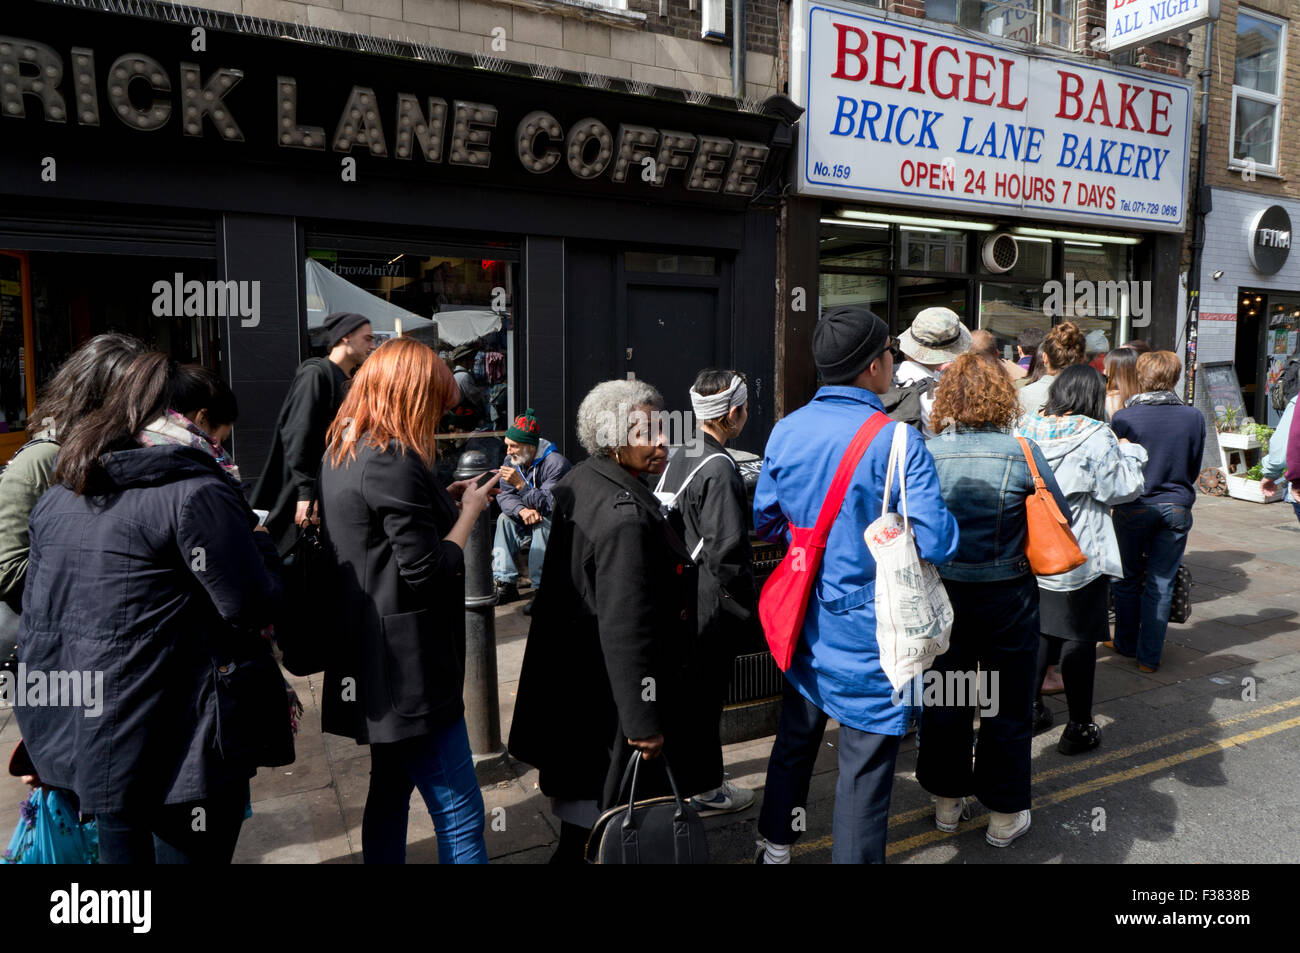 People queuing at Beigel Bake shop in Brick Lane London E1 Stock Photo